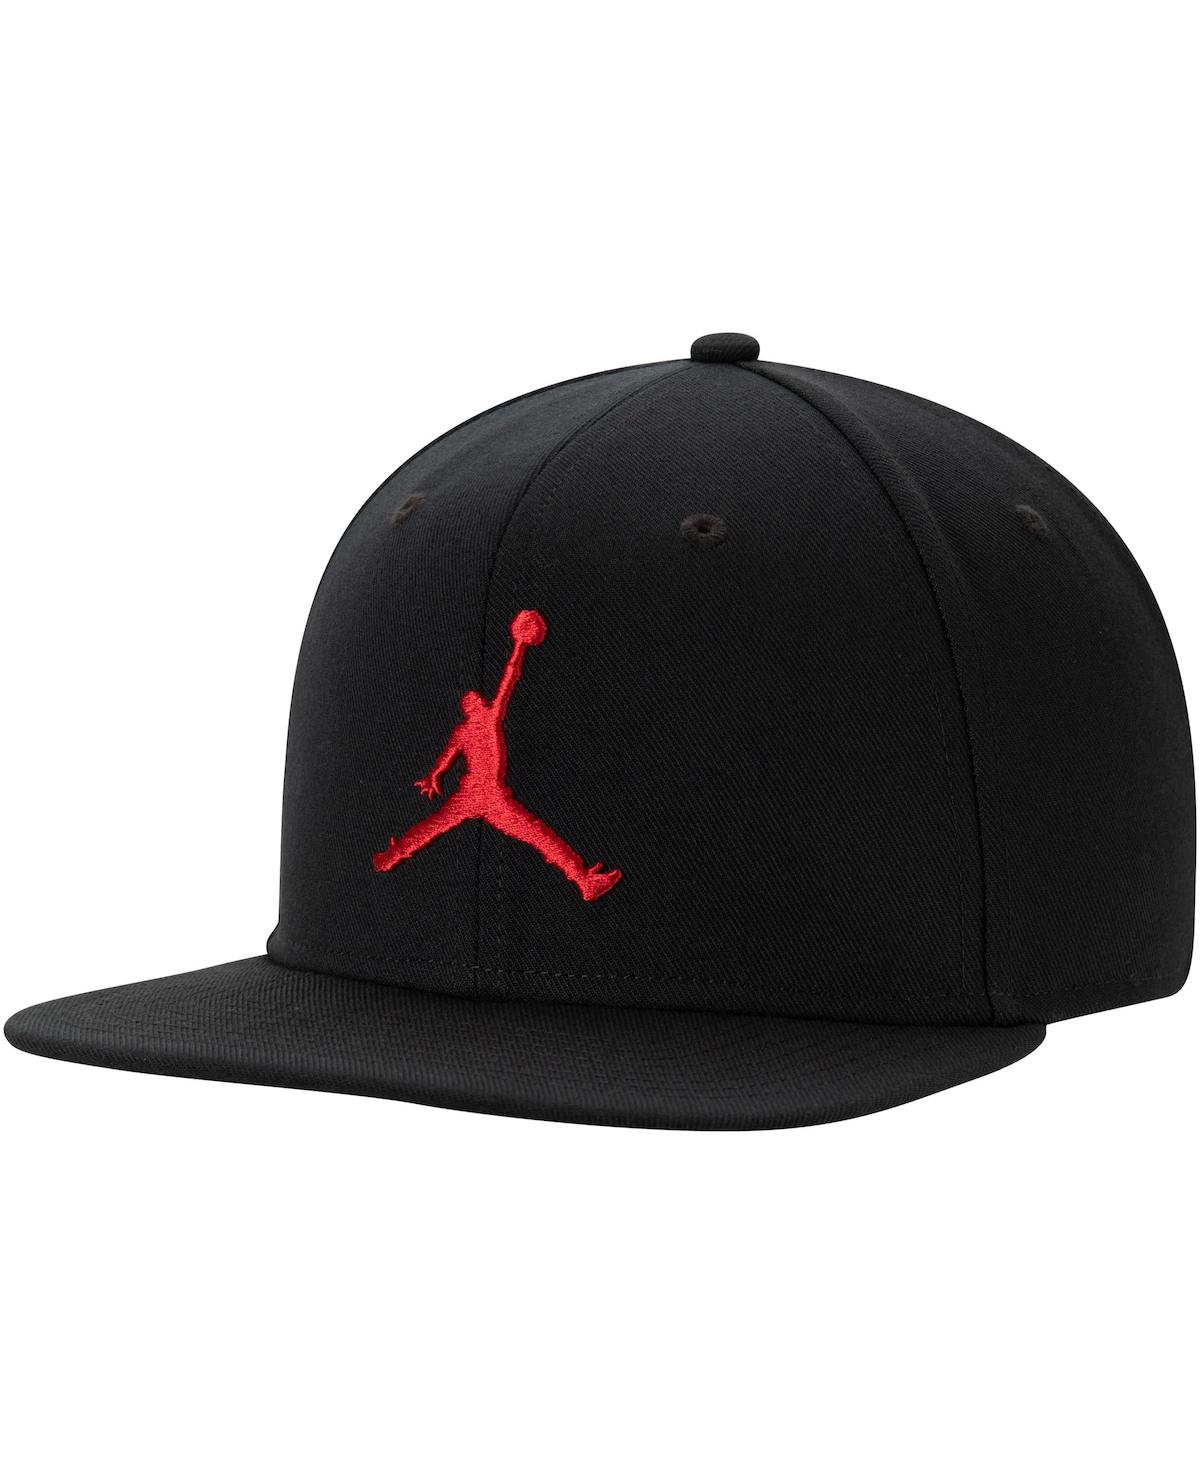 Men's Jordan Black Jumpman Pro Logo Snapback Adjustable Hat - Black